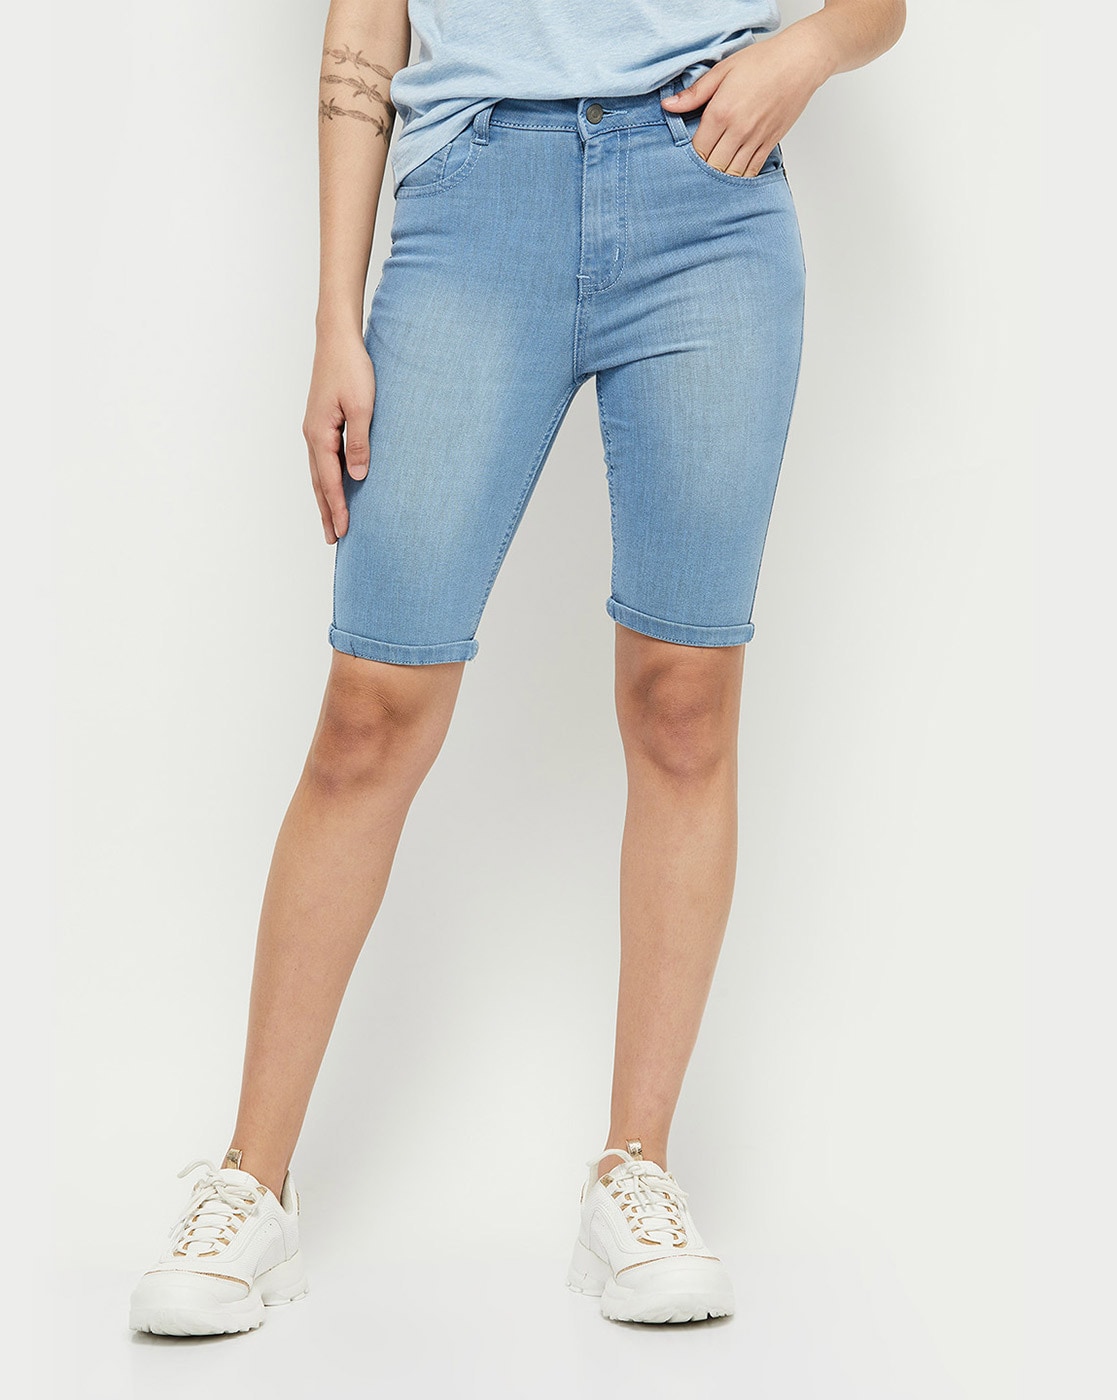 Aphrodite Denim Bermuda Shorts Jeans  High Waisted Knee Length Enhancing  Fashion Short Pants for Women 7011 Medium Blue 1 at Amazon Womens Clothing  store